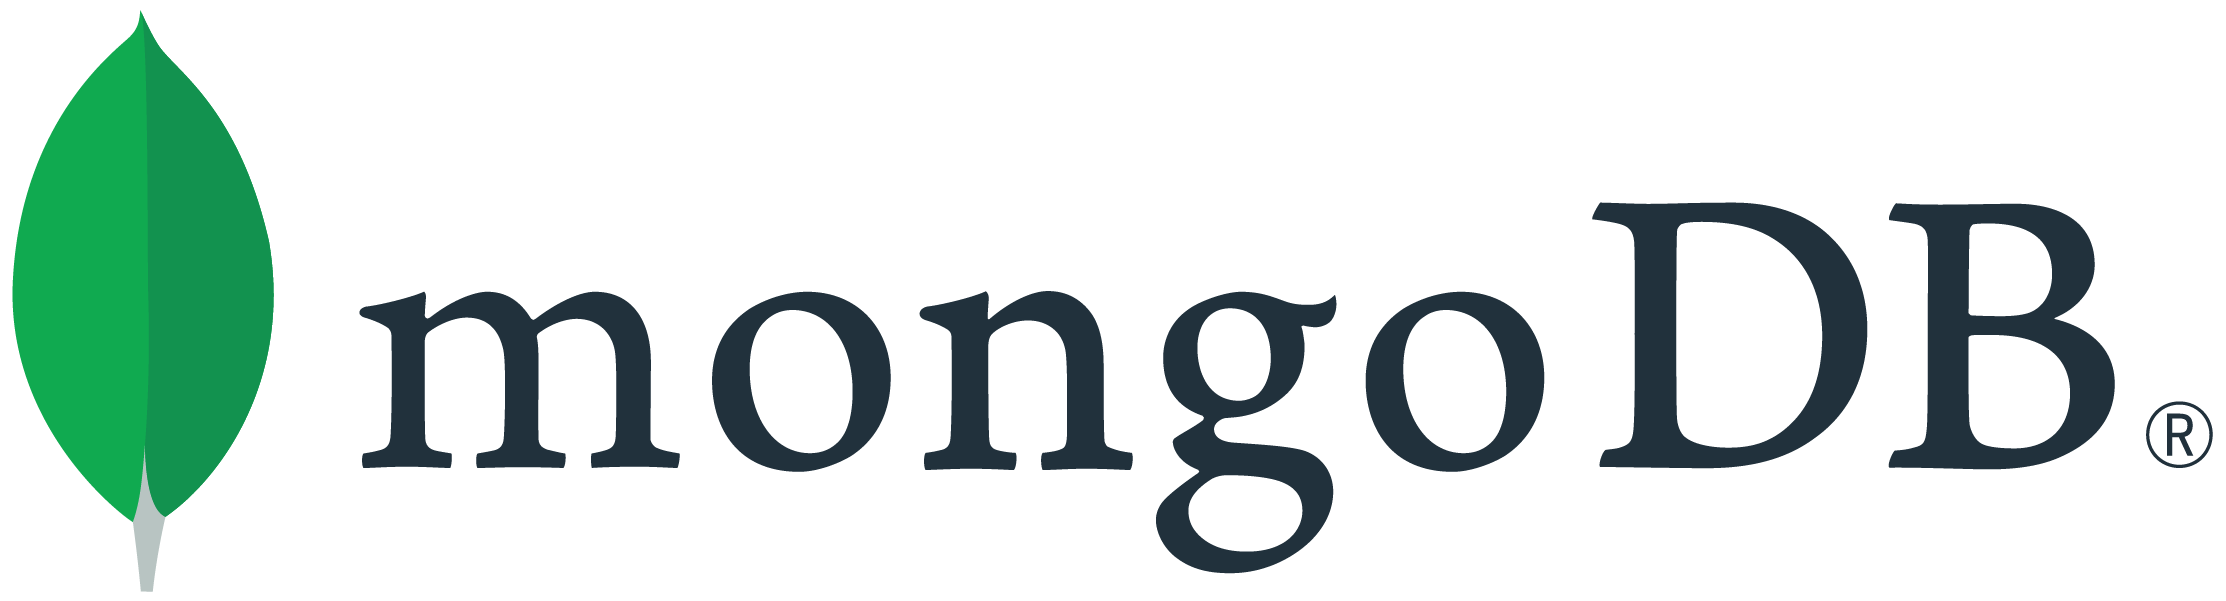 mongodb_logo-2